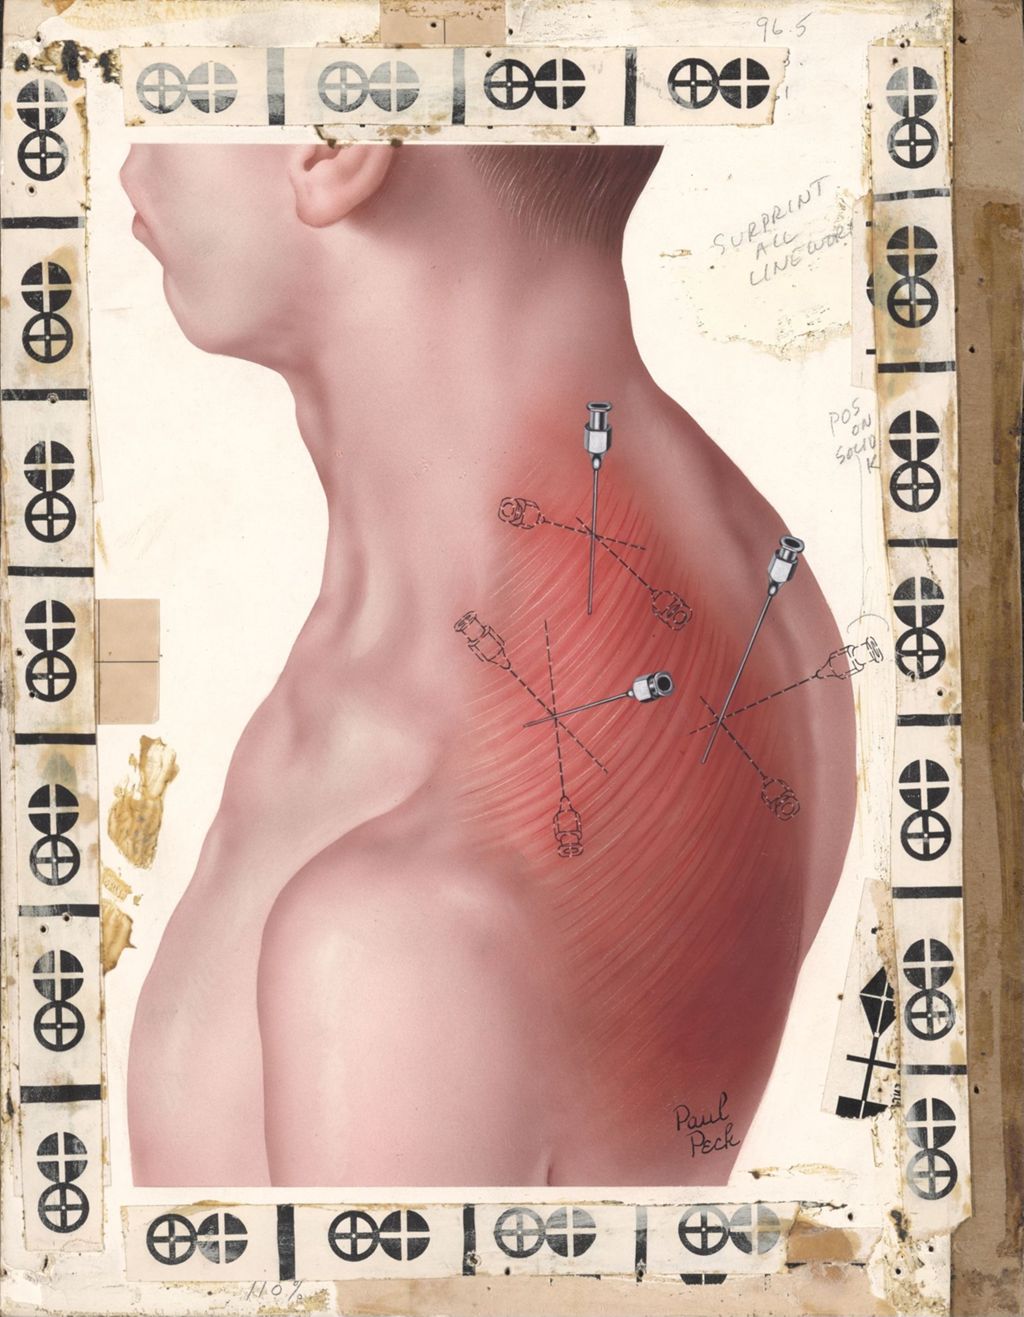 Miniature of Hydeltra, Artwork of man's shoulder showing needle insertion points